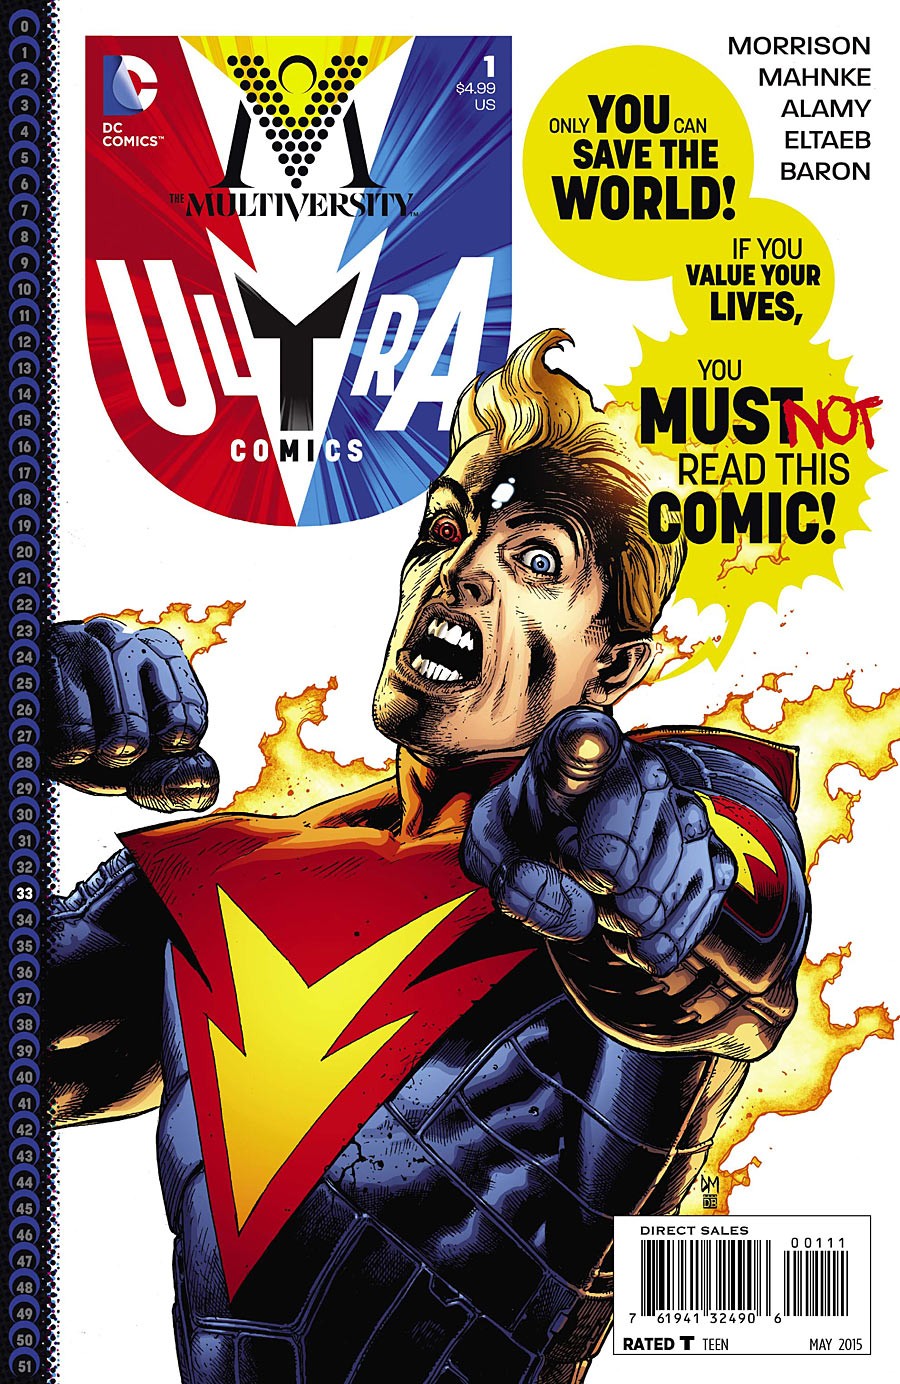 The Multiversity: Ultra Comics Vol. 1 #1